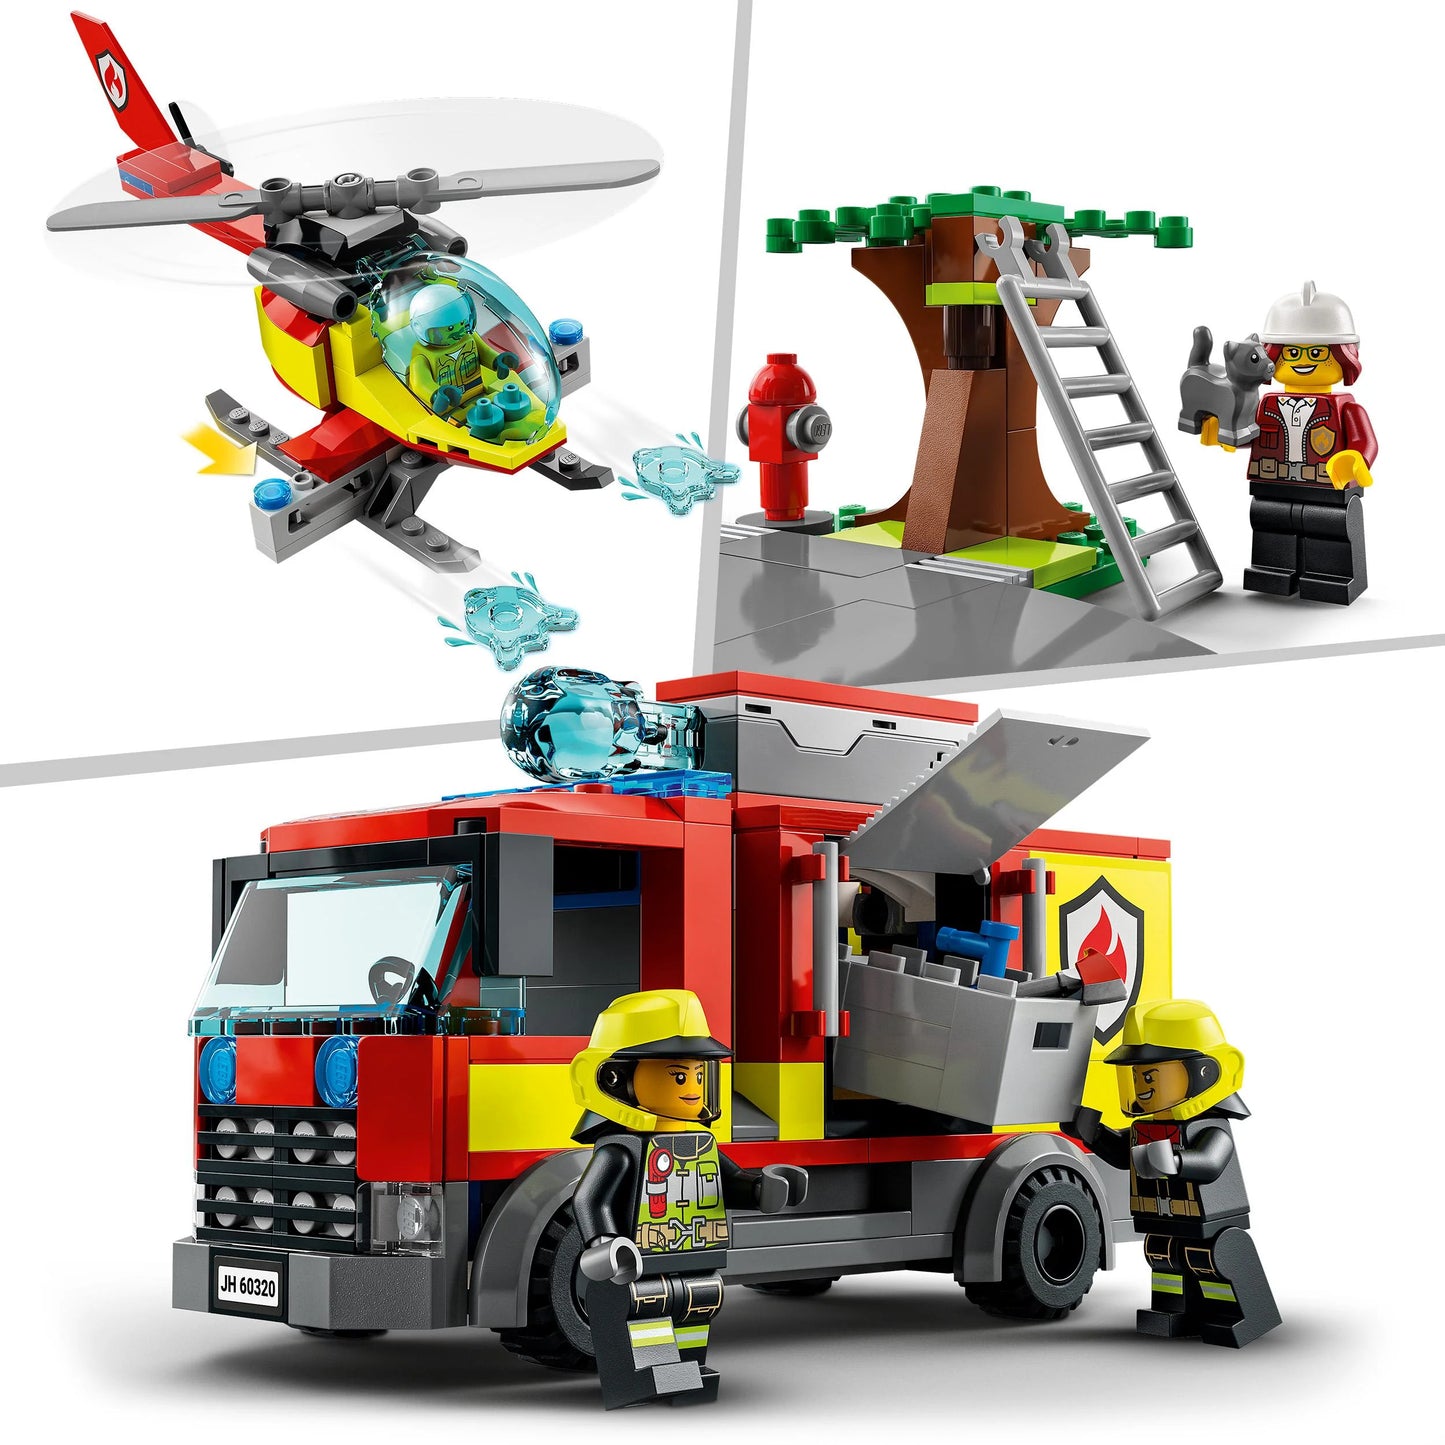 Brandweerkazerne-LEGO City